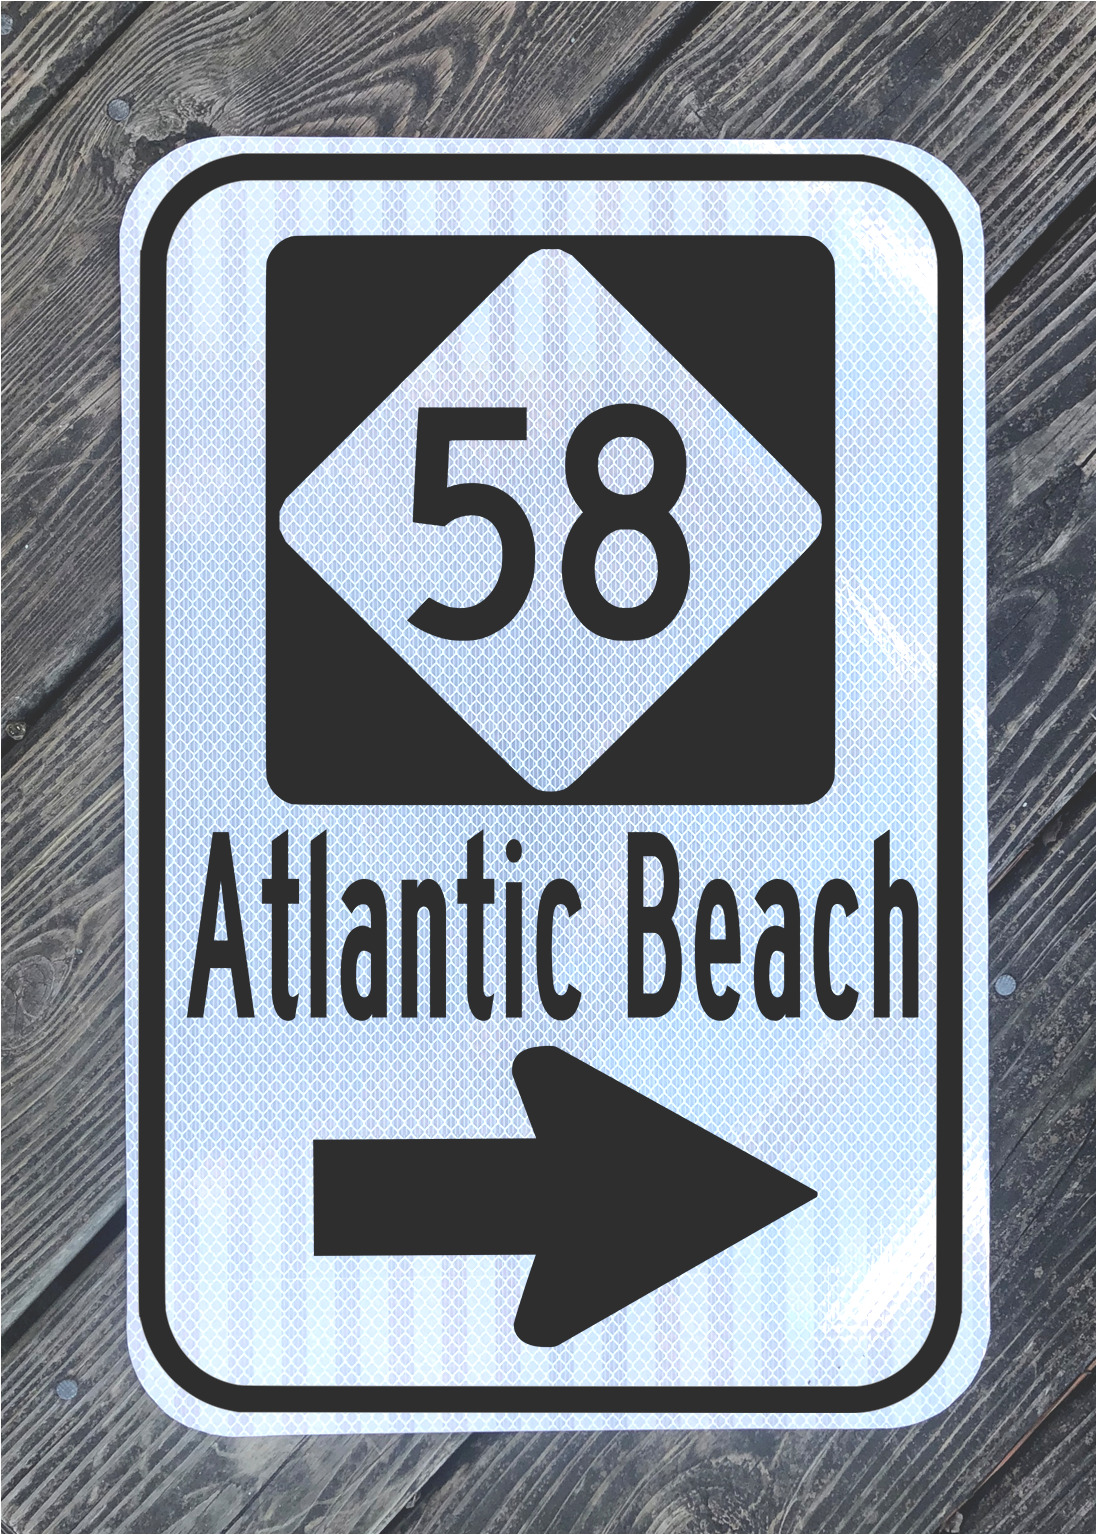 ATLANTIC BEACH NORTH CAROLINA Highway 58 road sign - DOT style  T